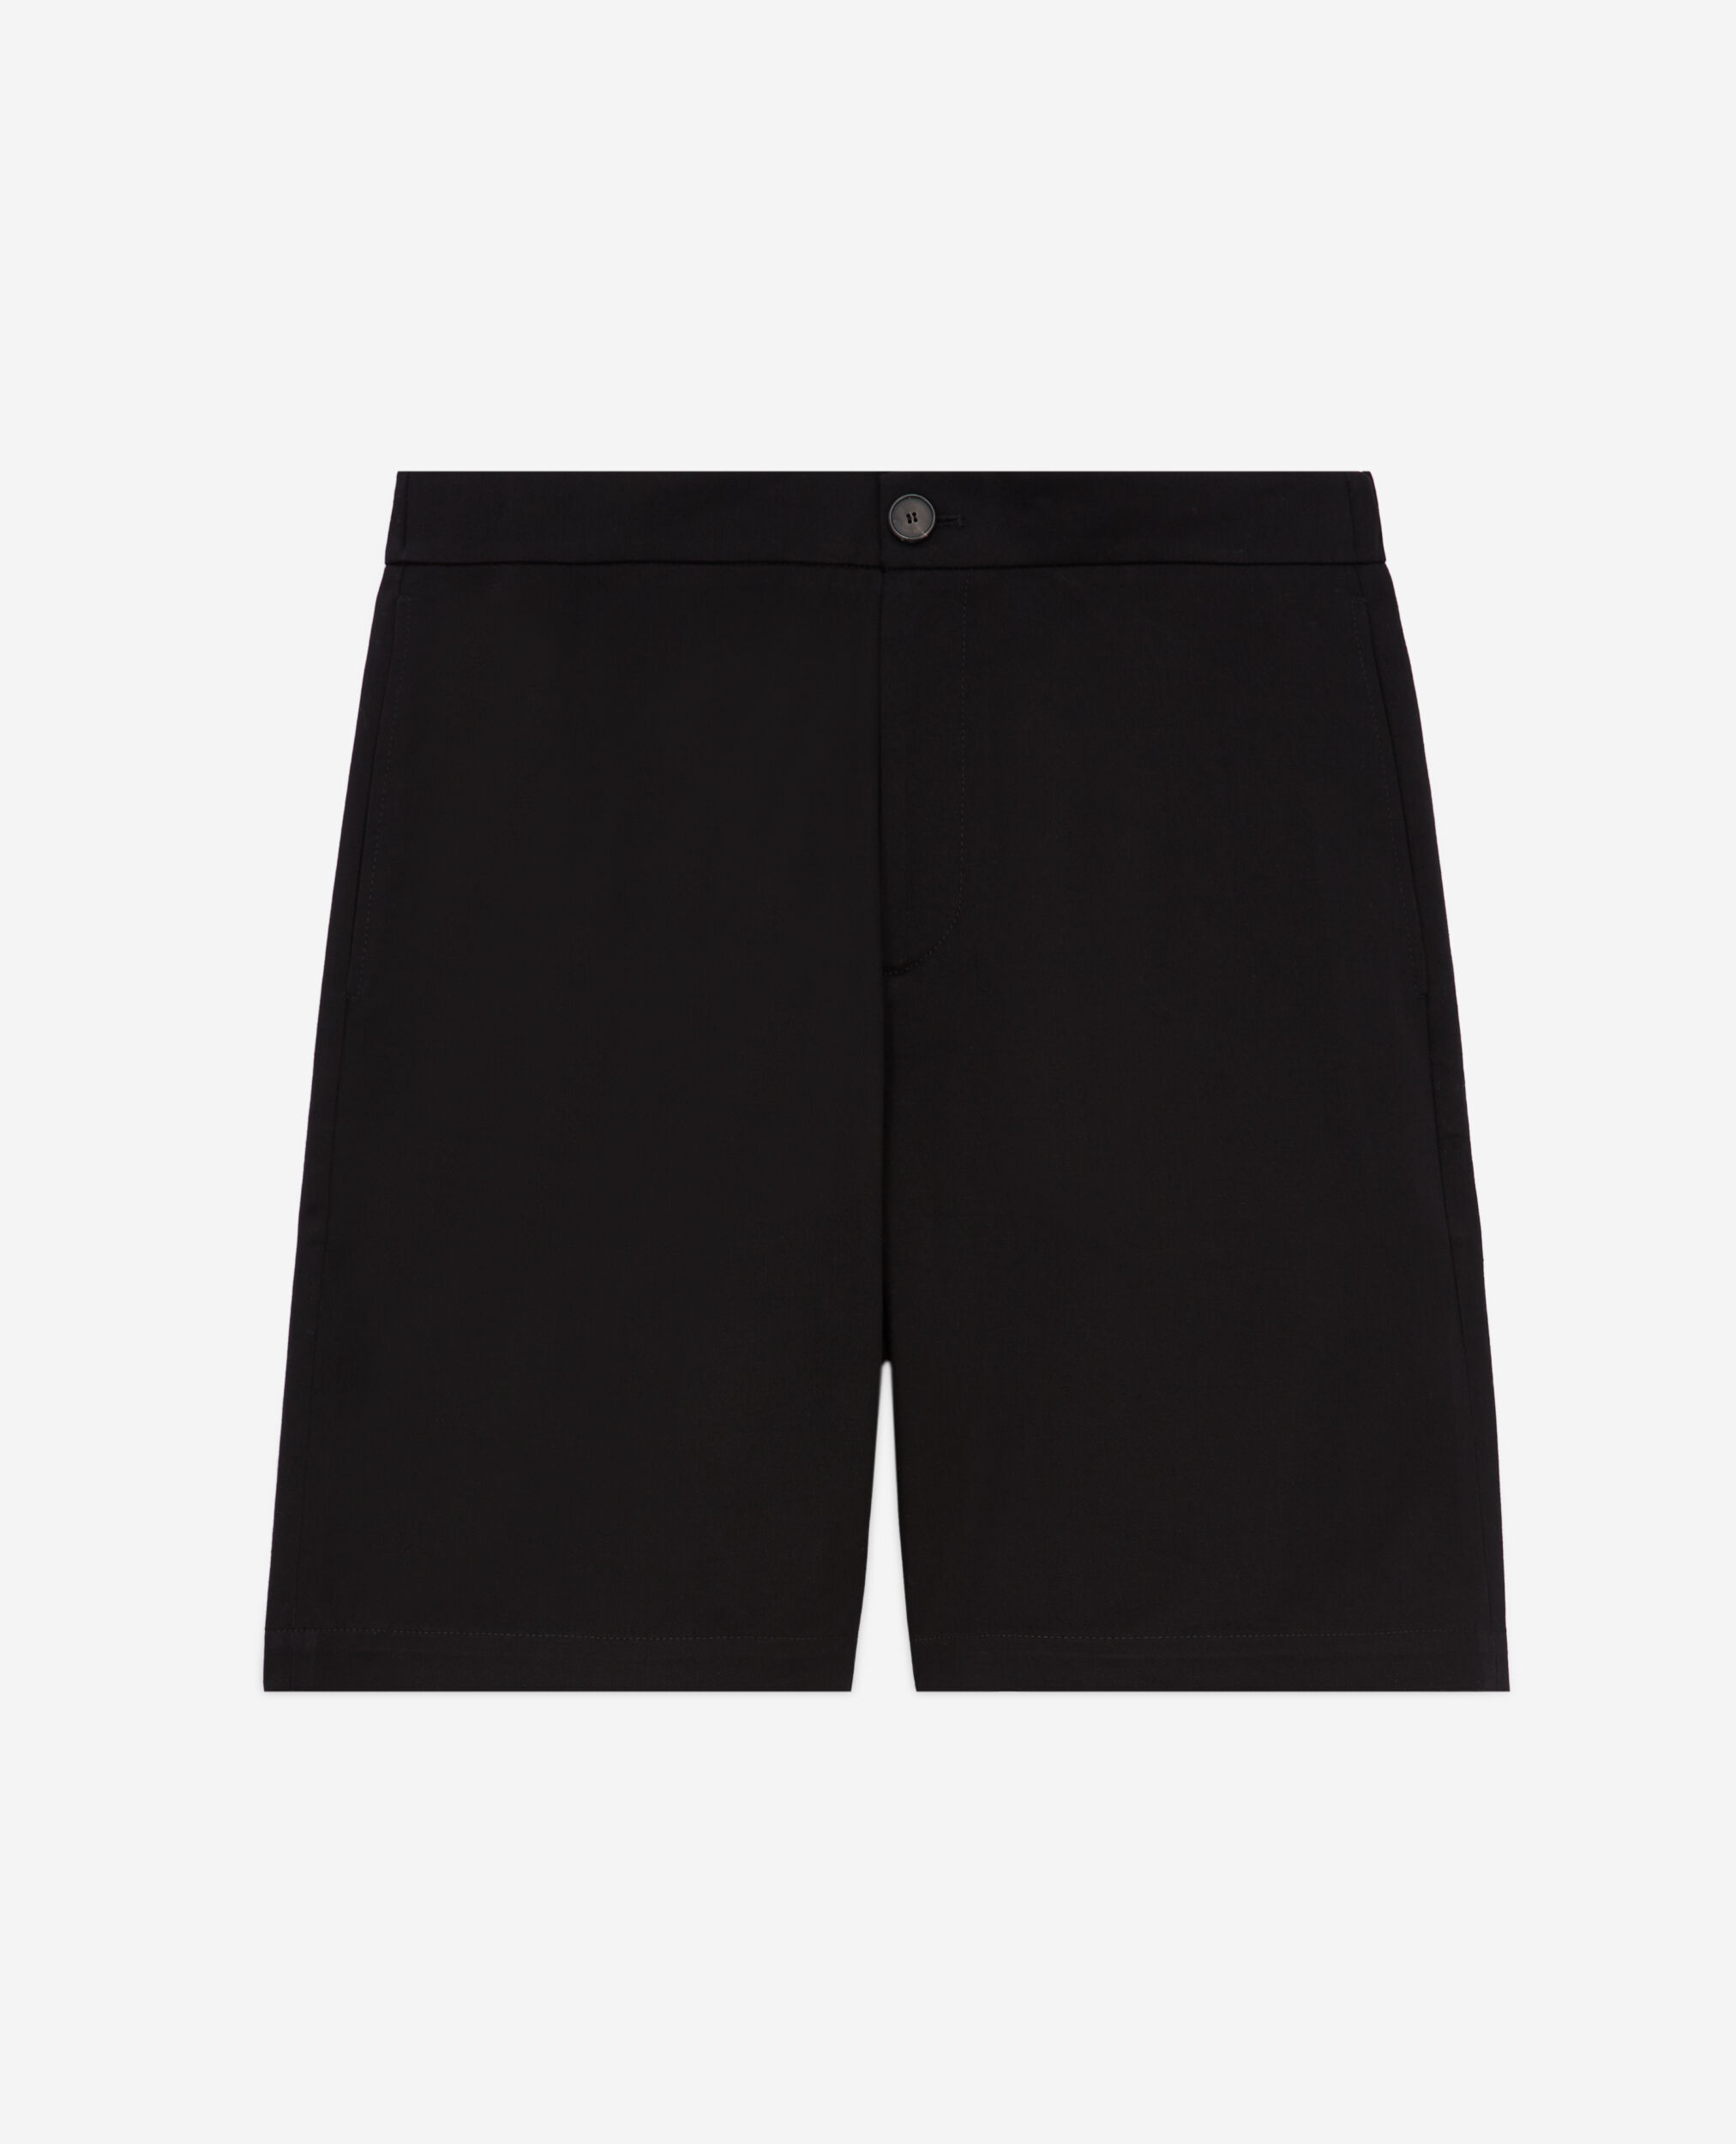 Pantalones cortos negros, BLACK, hi-res image number null